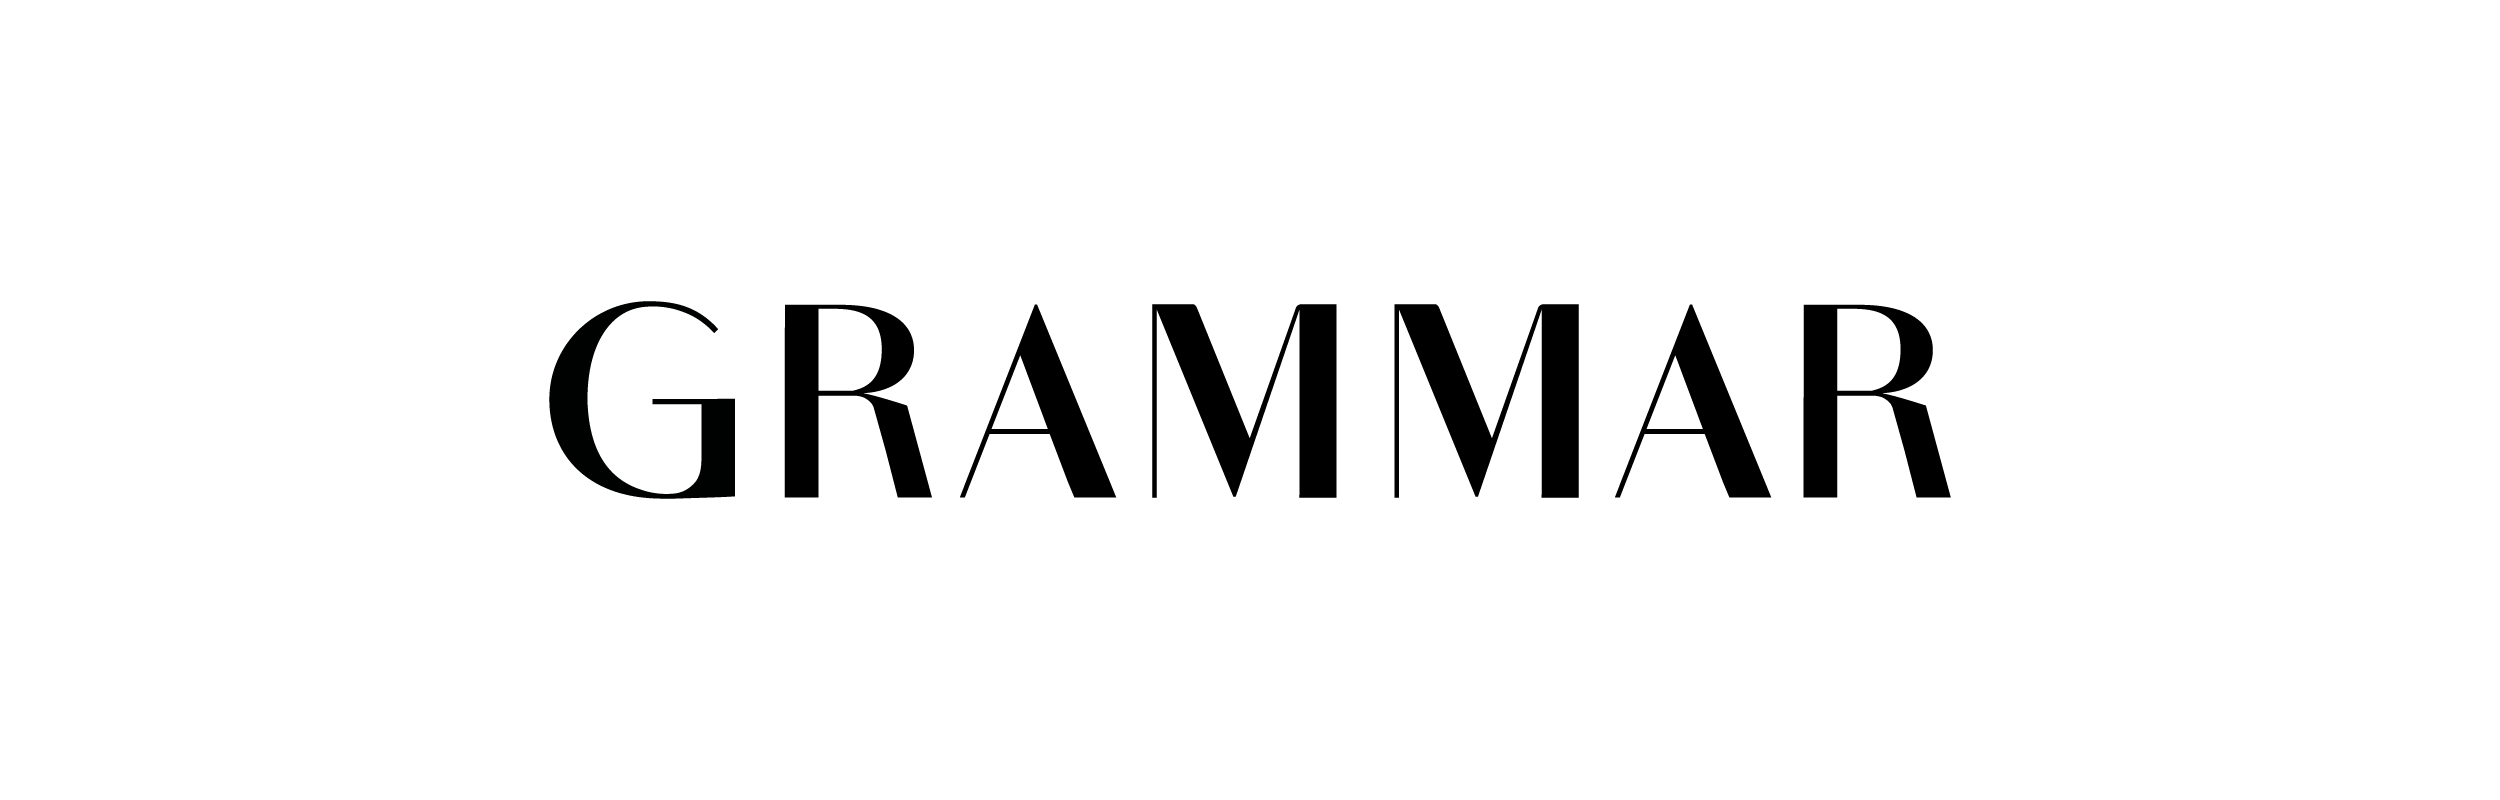 GRAMMAR_logo.jpg